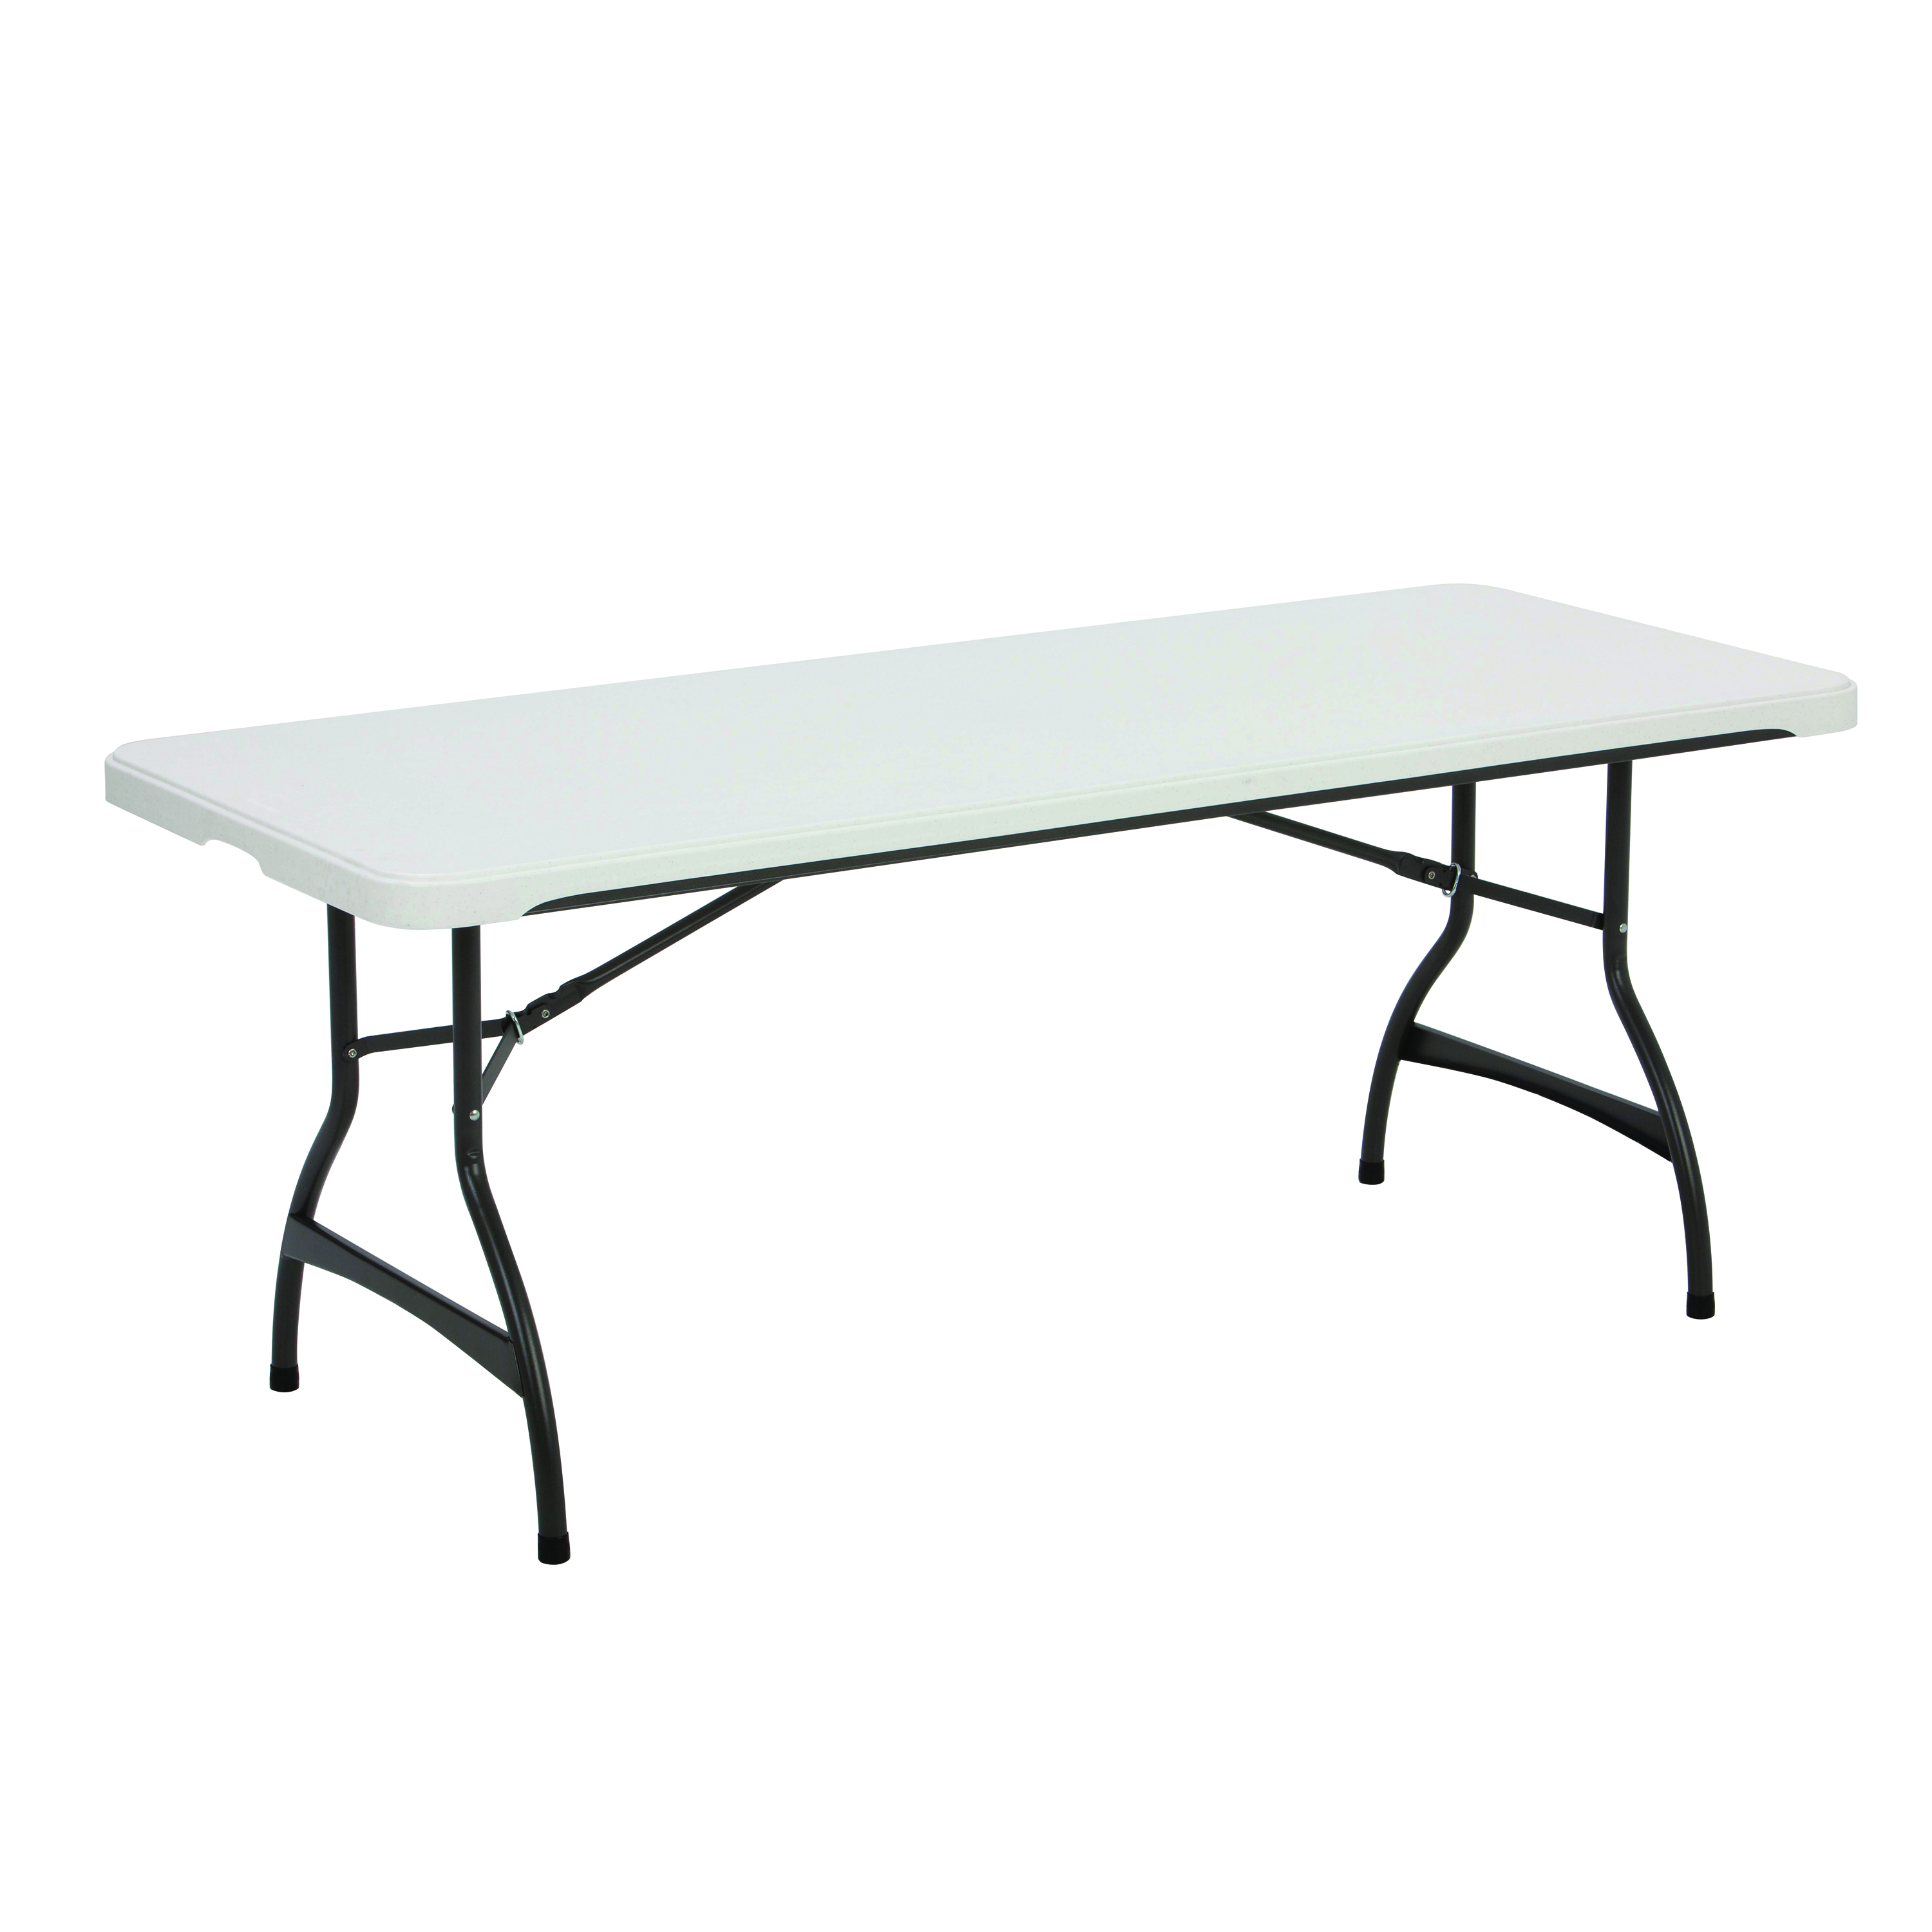 6ft Rectangular folding table 183cm / 8 people / NESTING heavy commercial